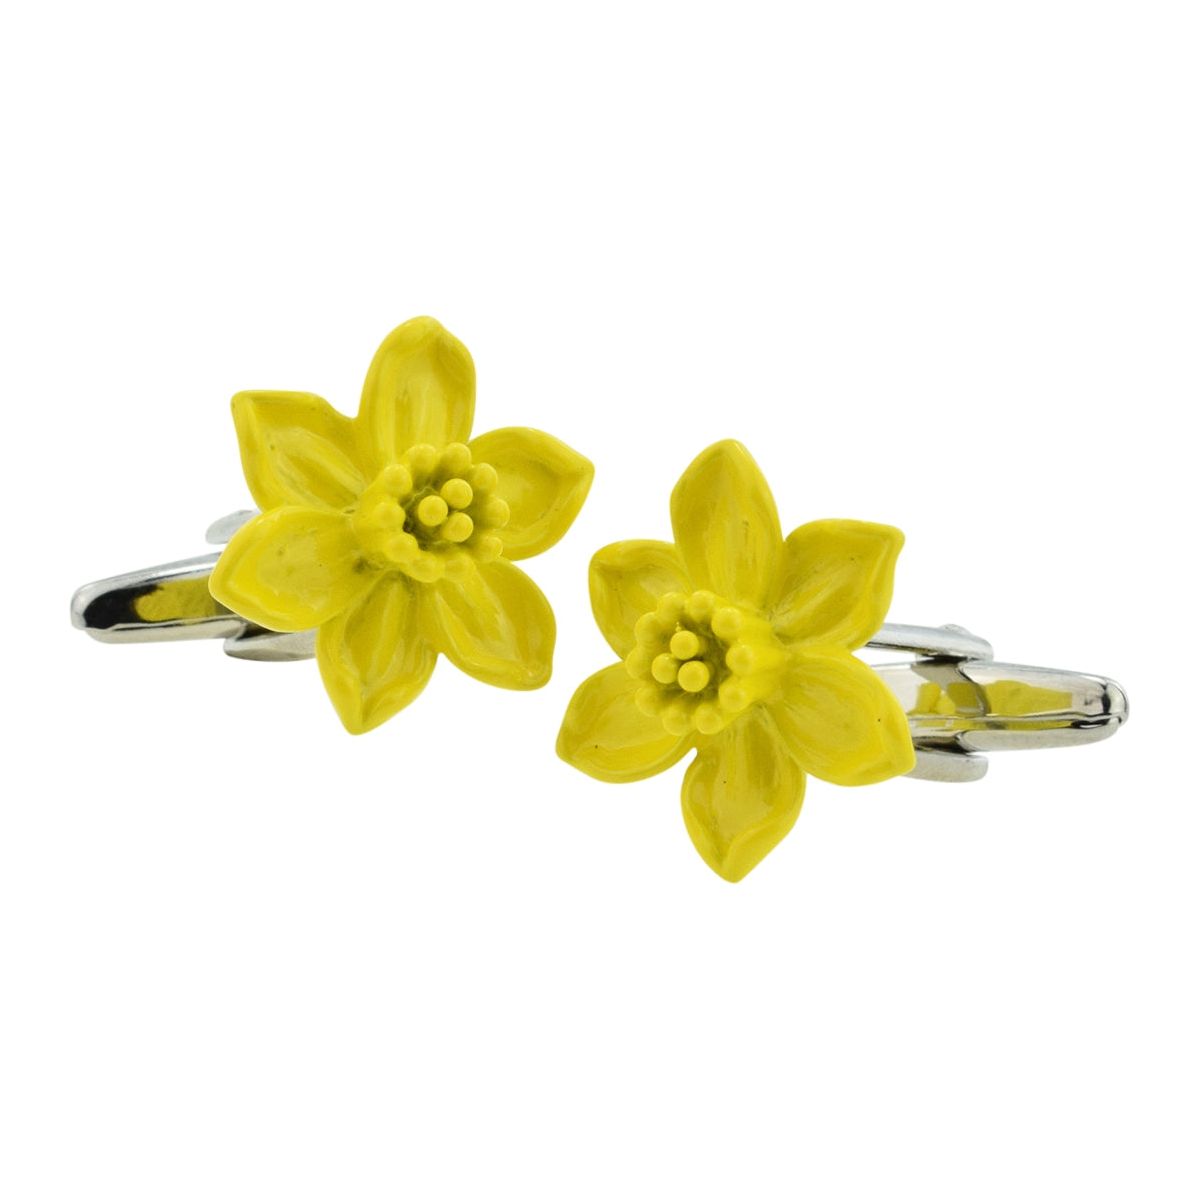 Welsh Daffodil Cufflinks - Ashton and Finch